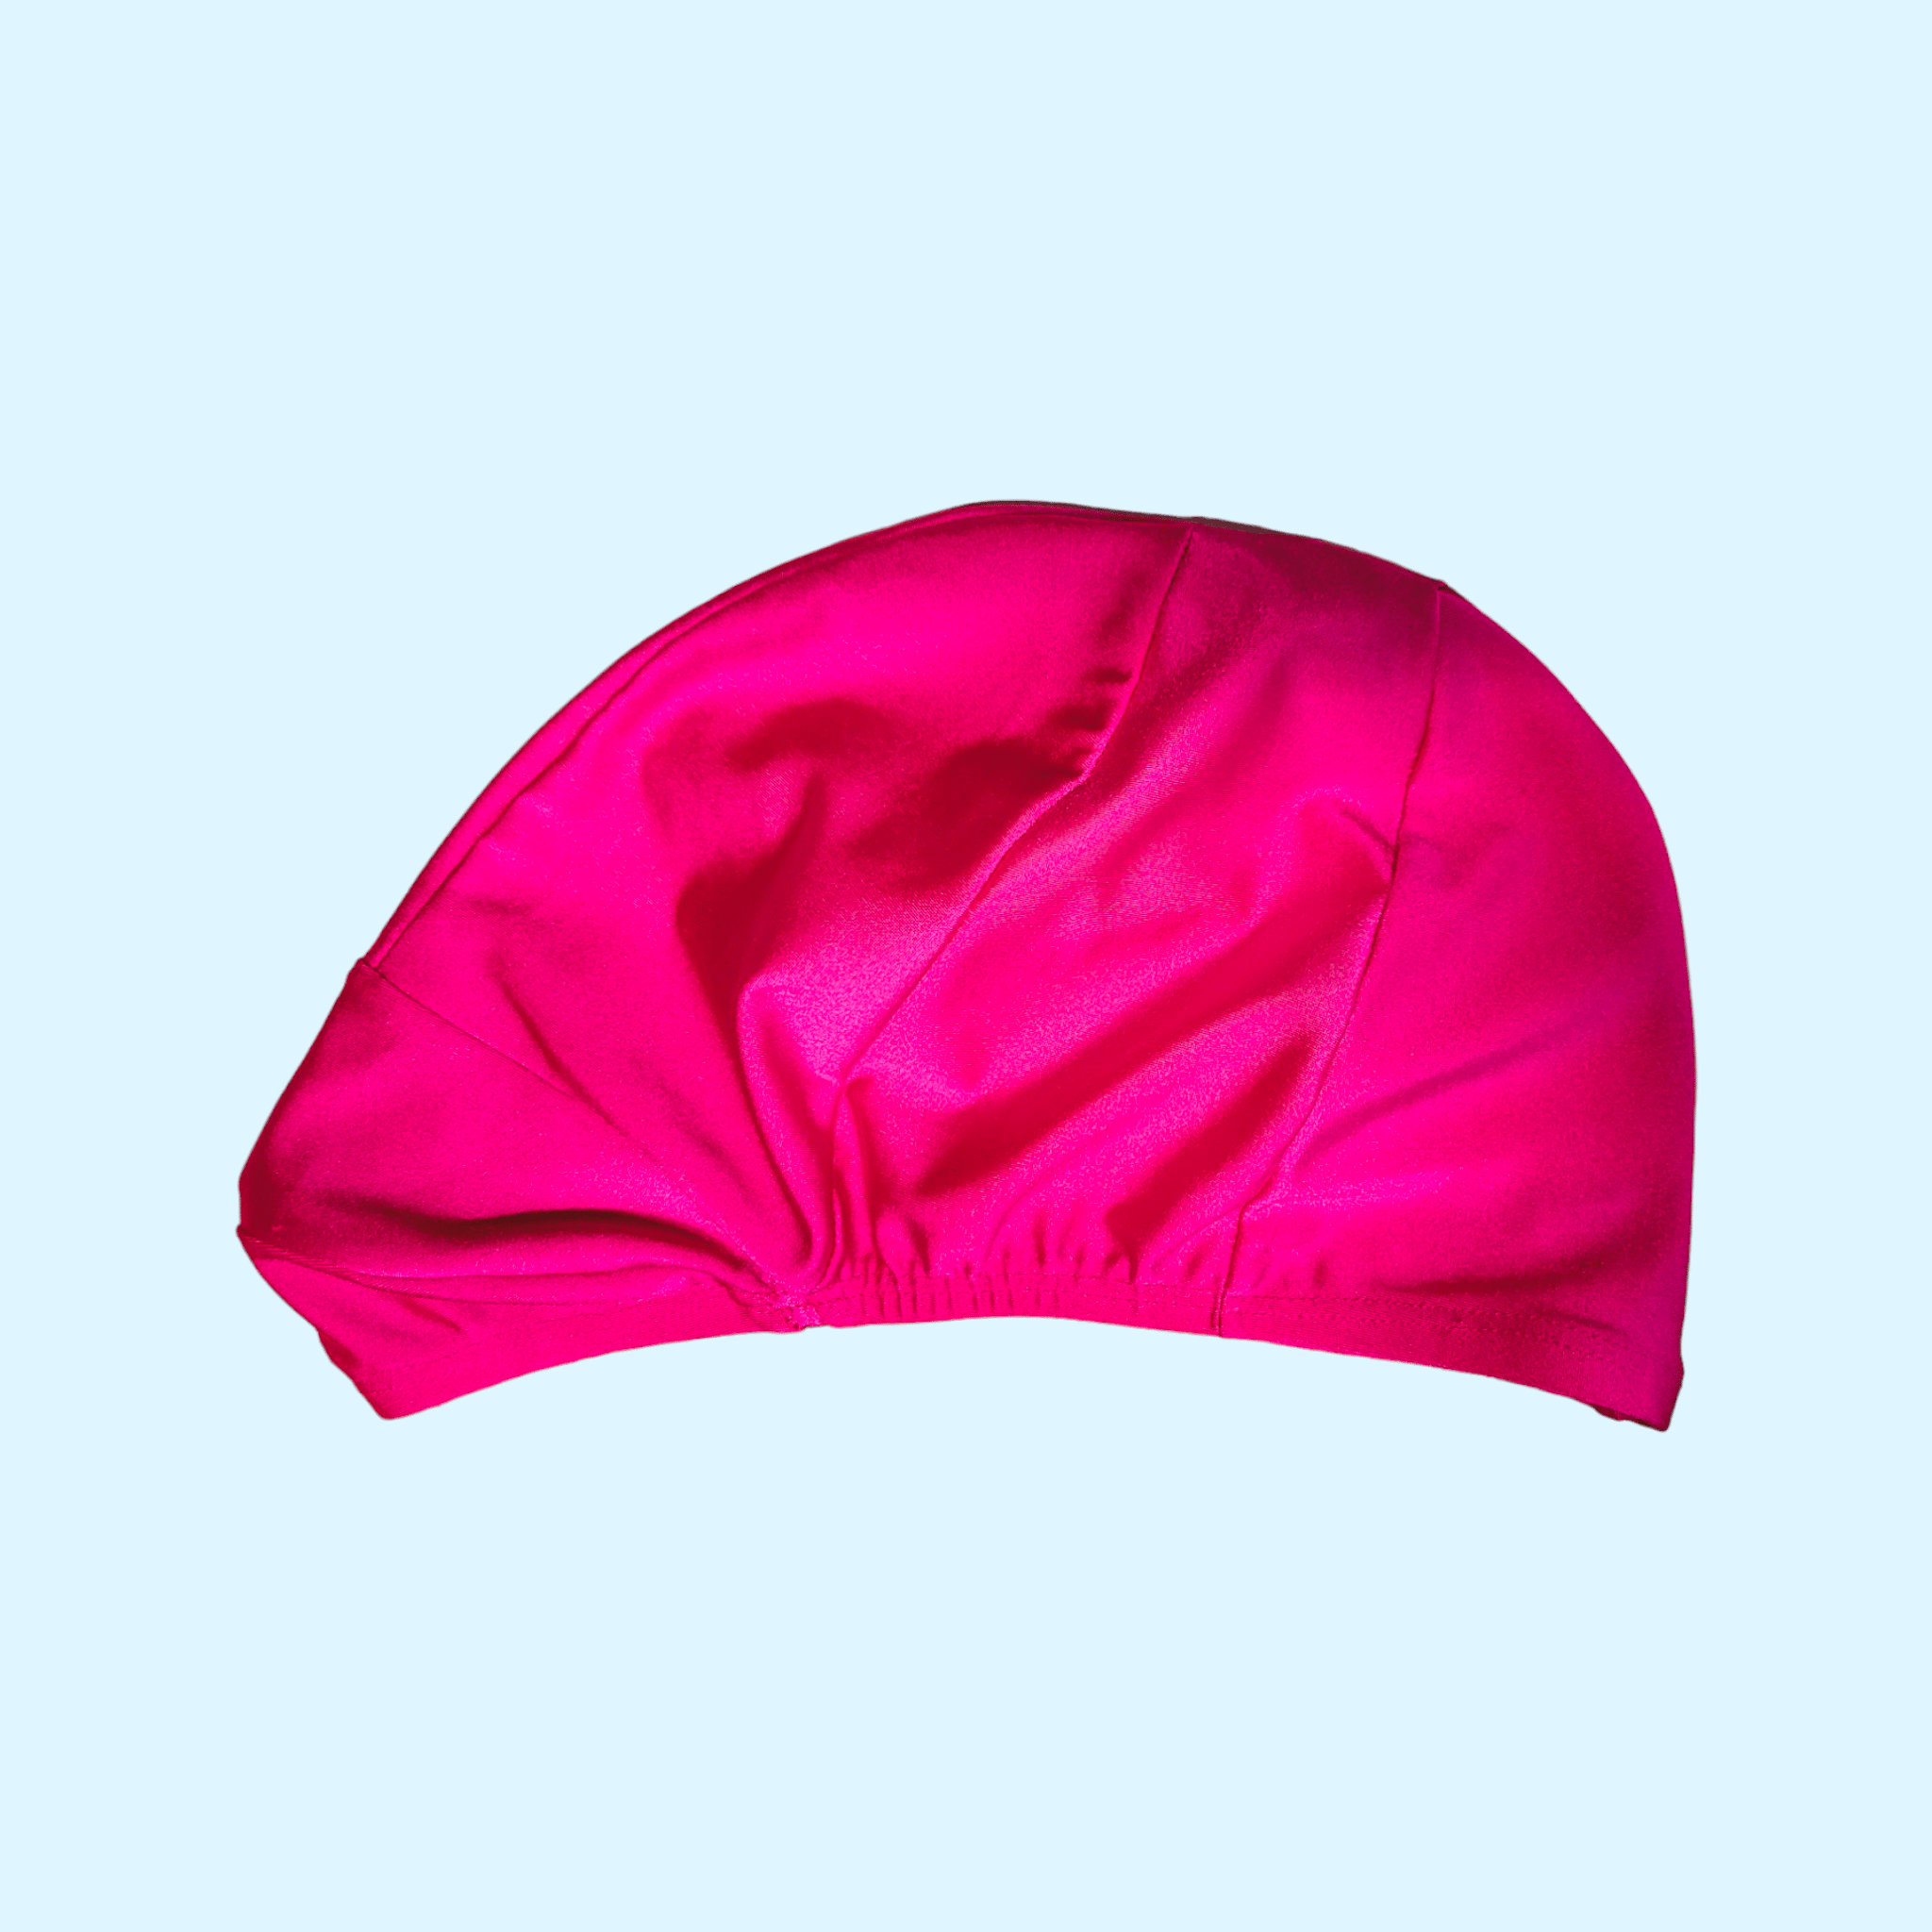 Ovation Lycra Helmet Cover in Hot Pink - Equine Exchange Tack Shop